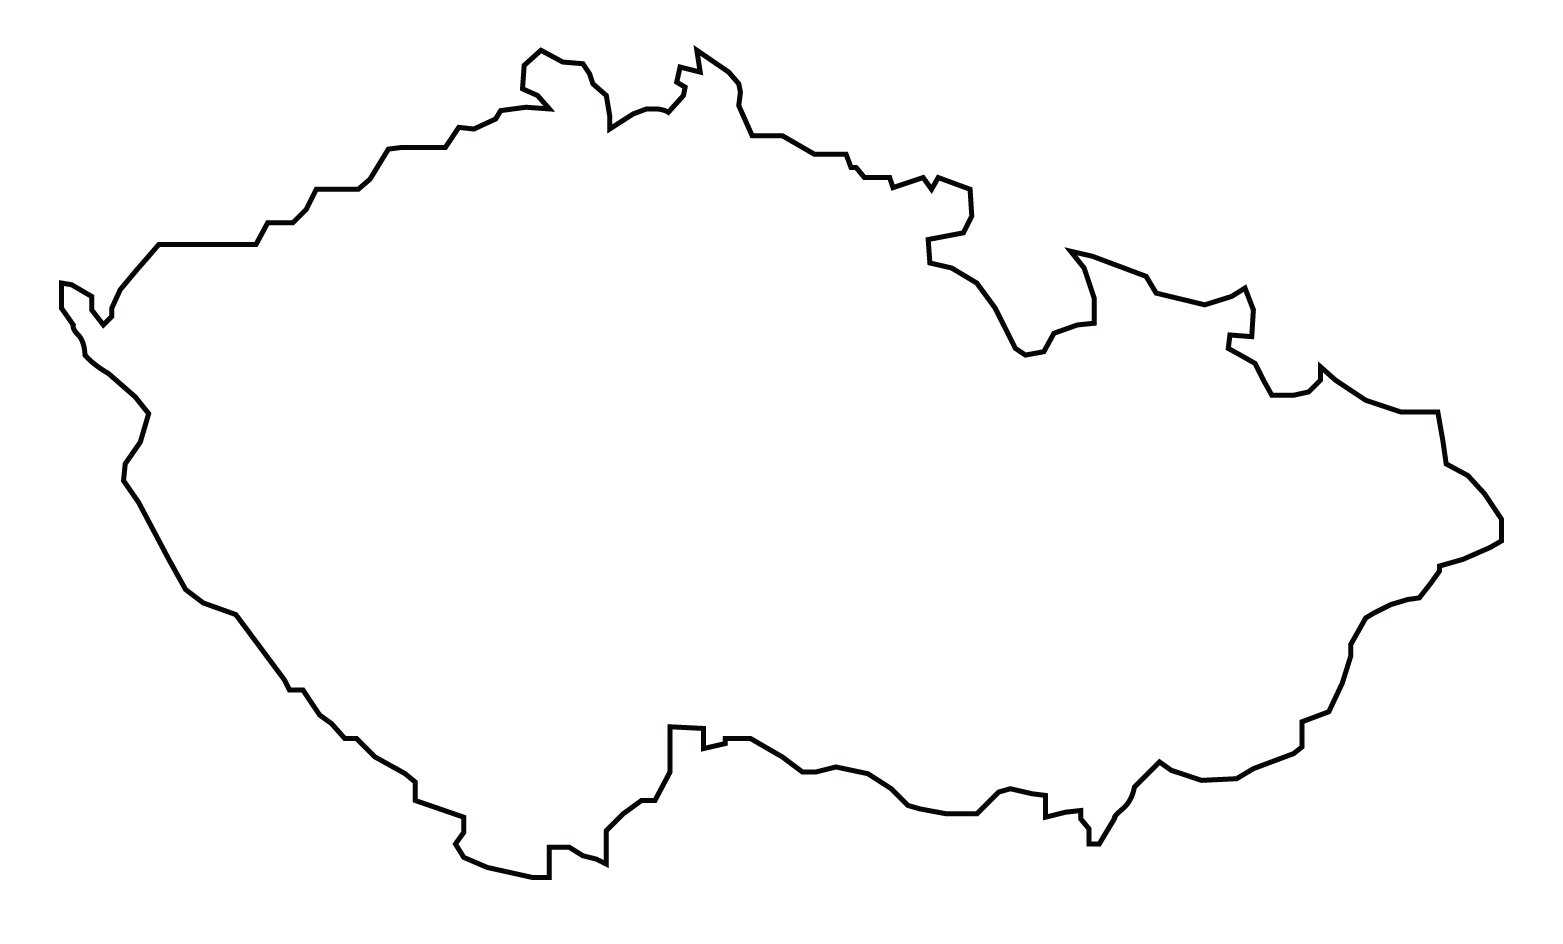 Slepa Mapa Ceskoslovenska